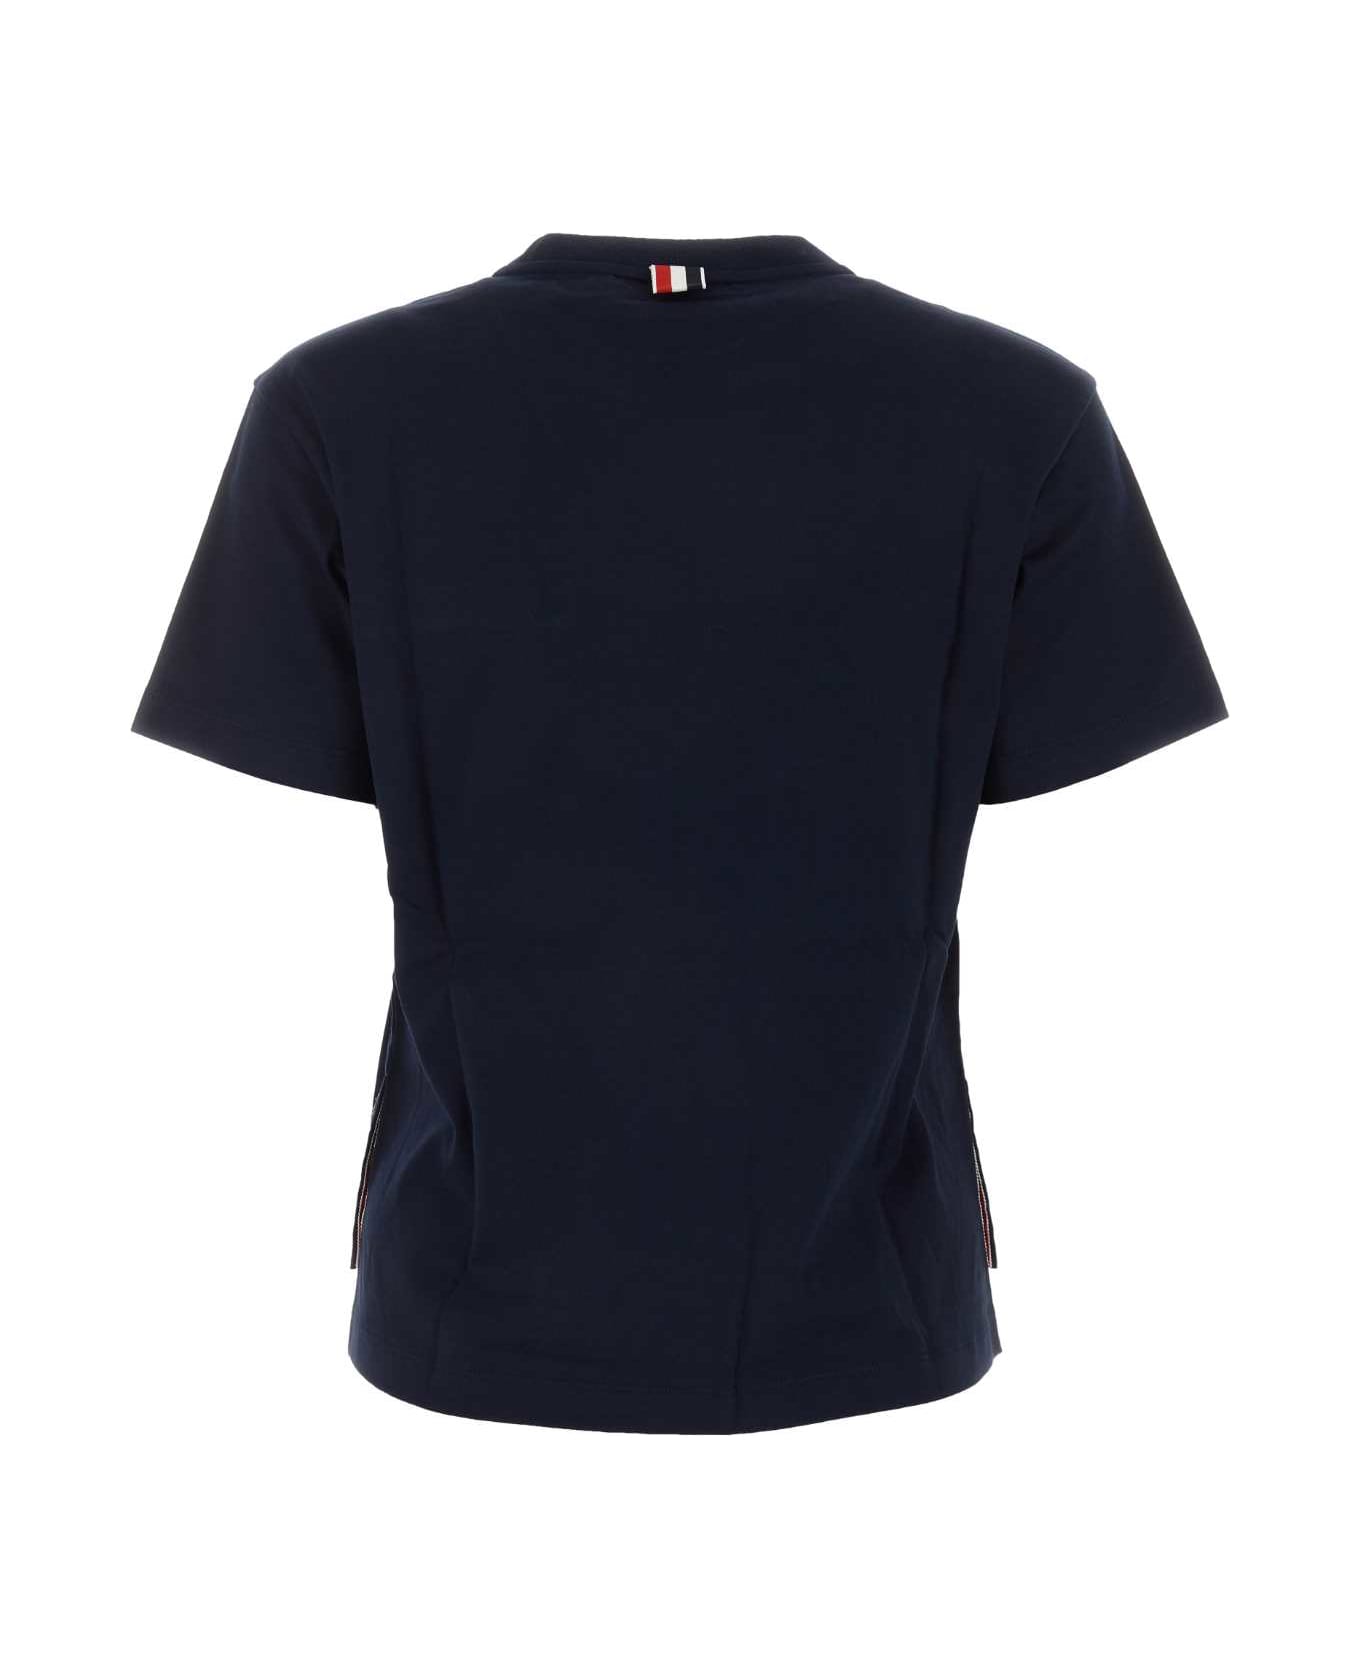 Thom Browne Midnight Blue Cotton T-shirt - 415